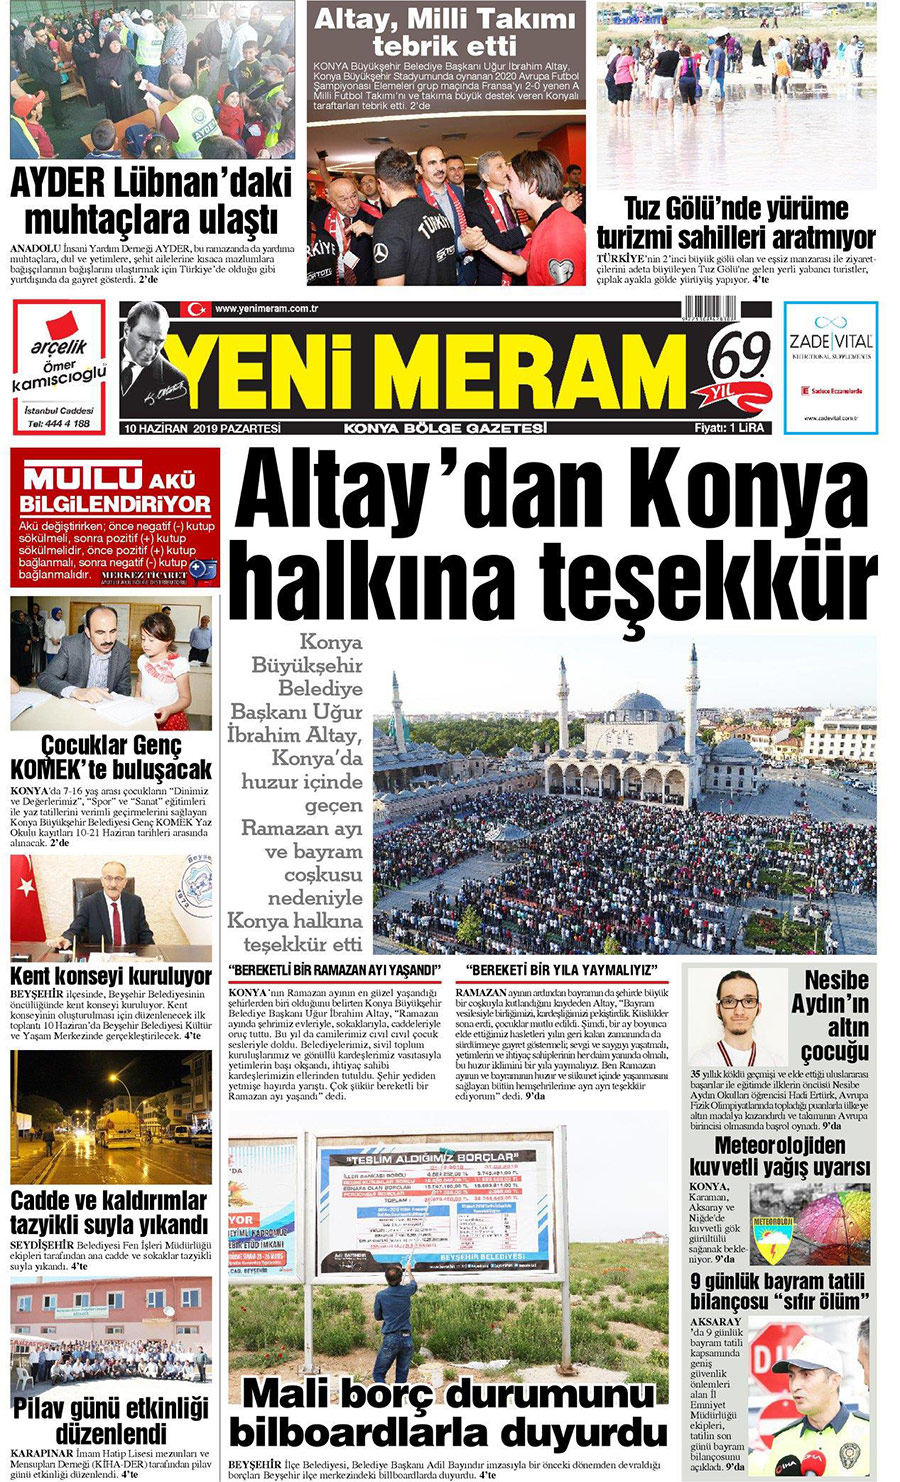 10 Haziran 2019 Yeni Meram Gazetesi